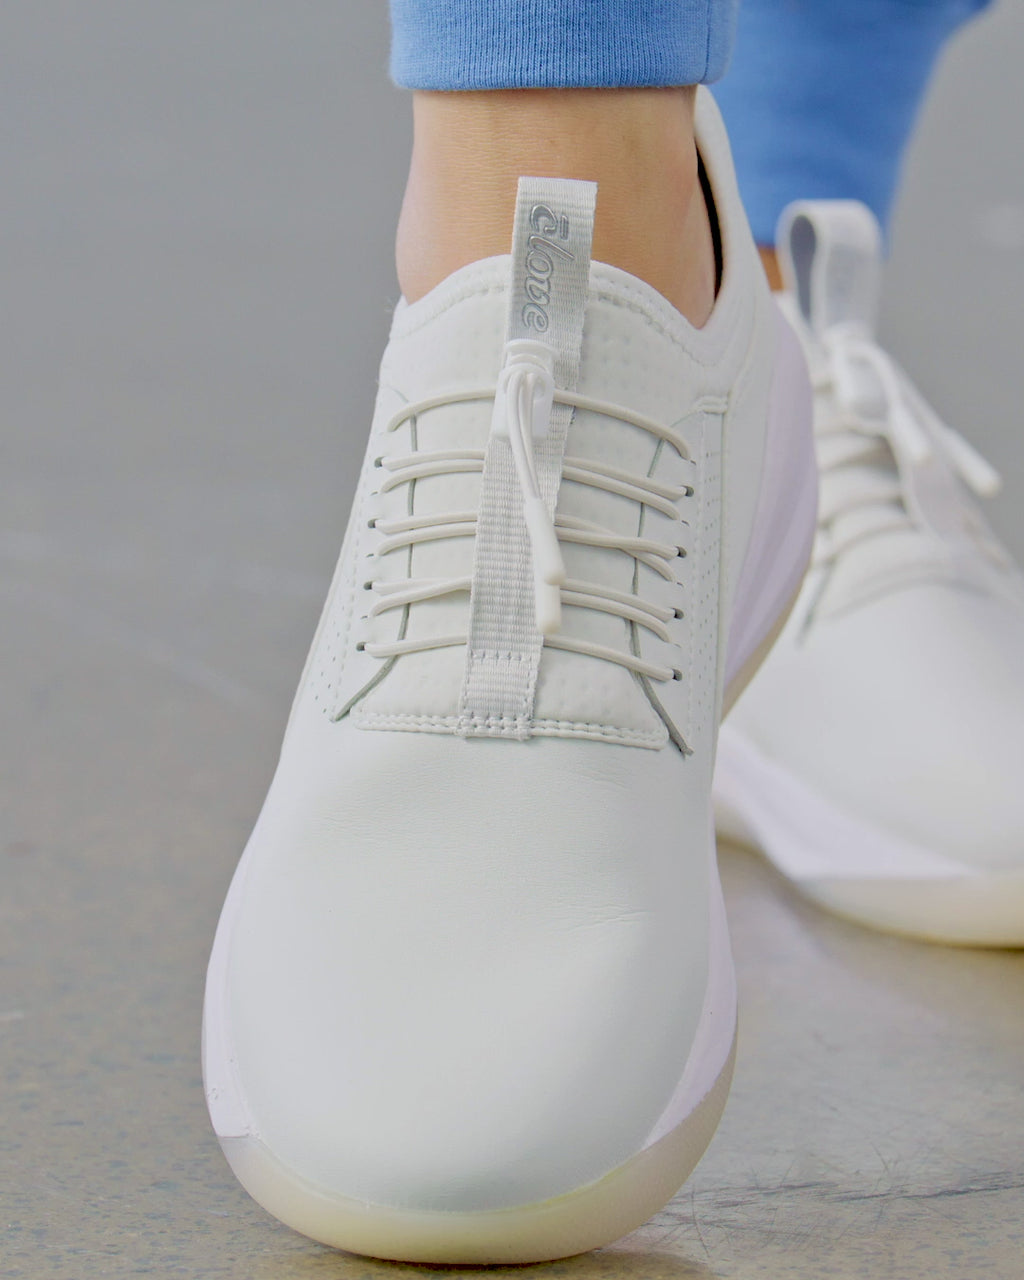 Best All White Shoes for Nurses - White Nursing Shoes